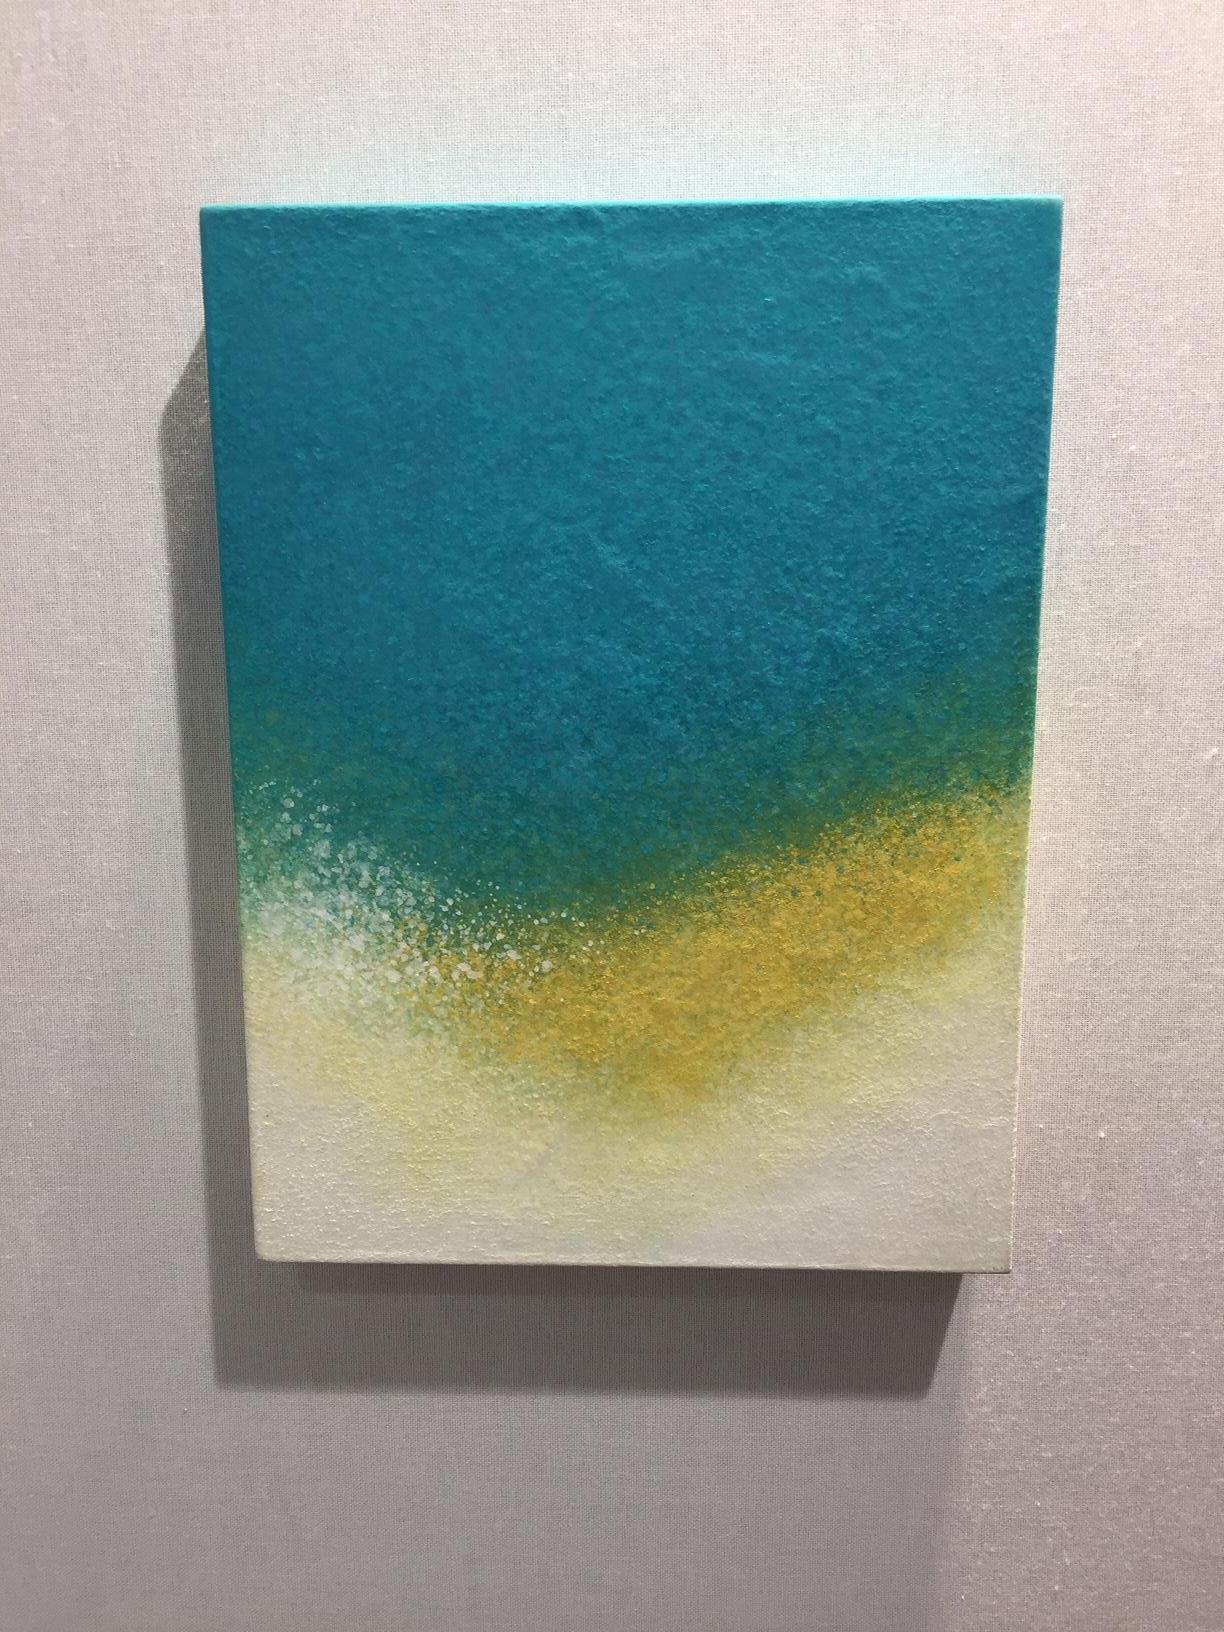 Title: Into the light  
Year: 2019
Technique: pigment (Iwaenogu), glue, and & water on cotton (Washi) marouflaged on panel
Size: 24 x 13 x 4 cm 

FUSAKO EKUNI (JPN)

Born in 1947 in Yokohama, Japan
Lives & works in Tokyo, Japan

Fusako Ekuni is